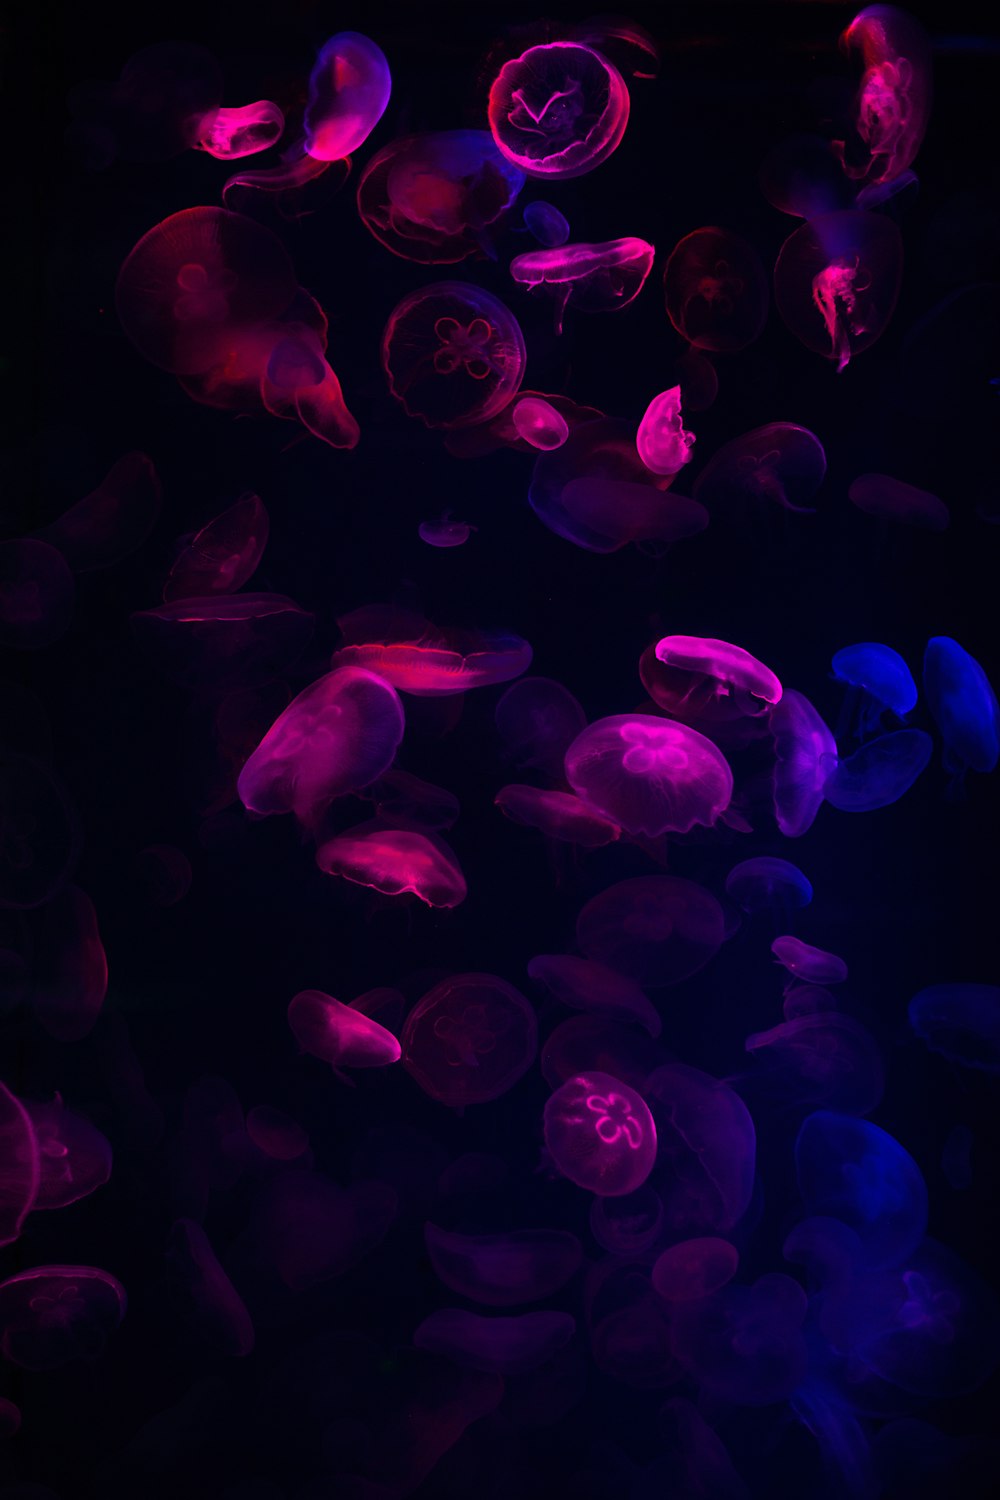 purple jellyfish in water during daytime